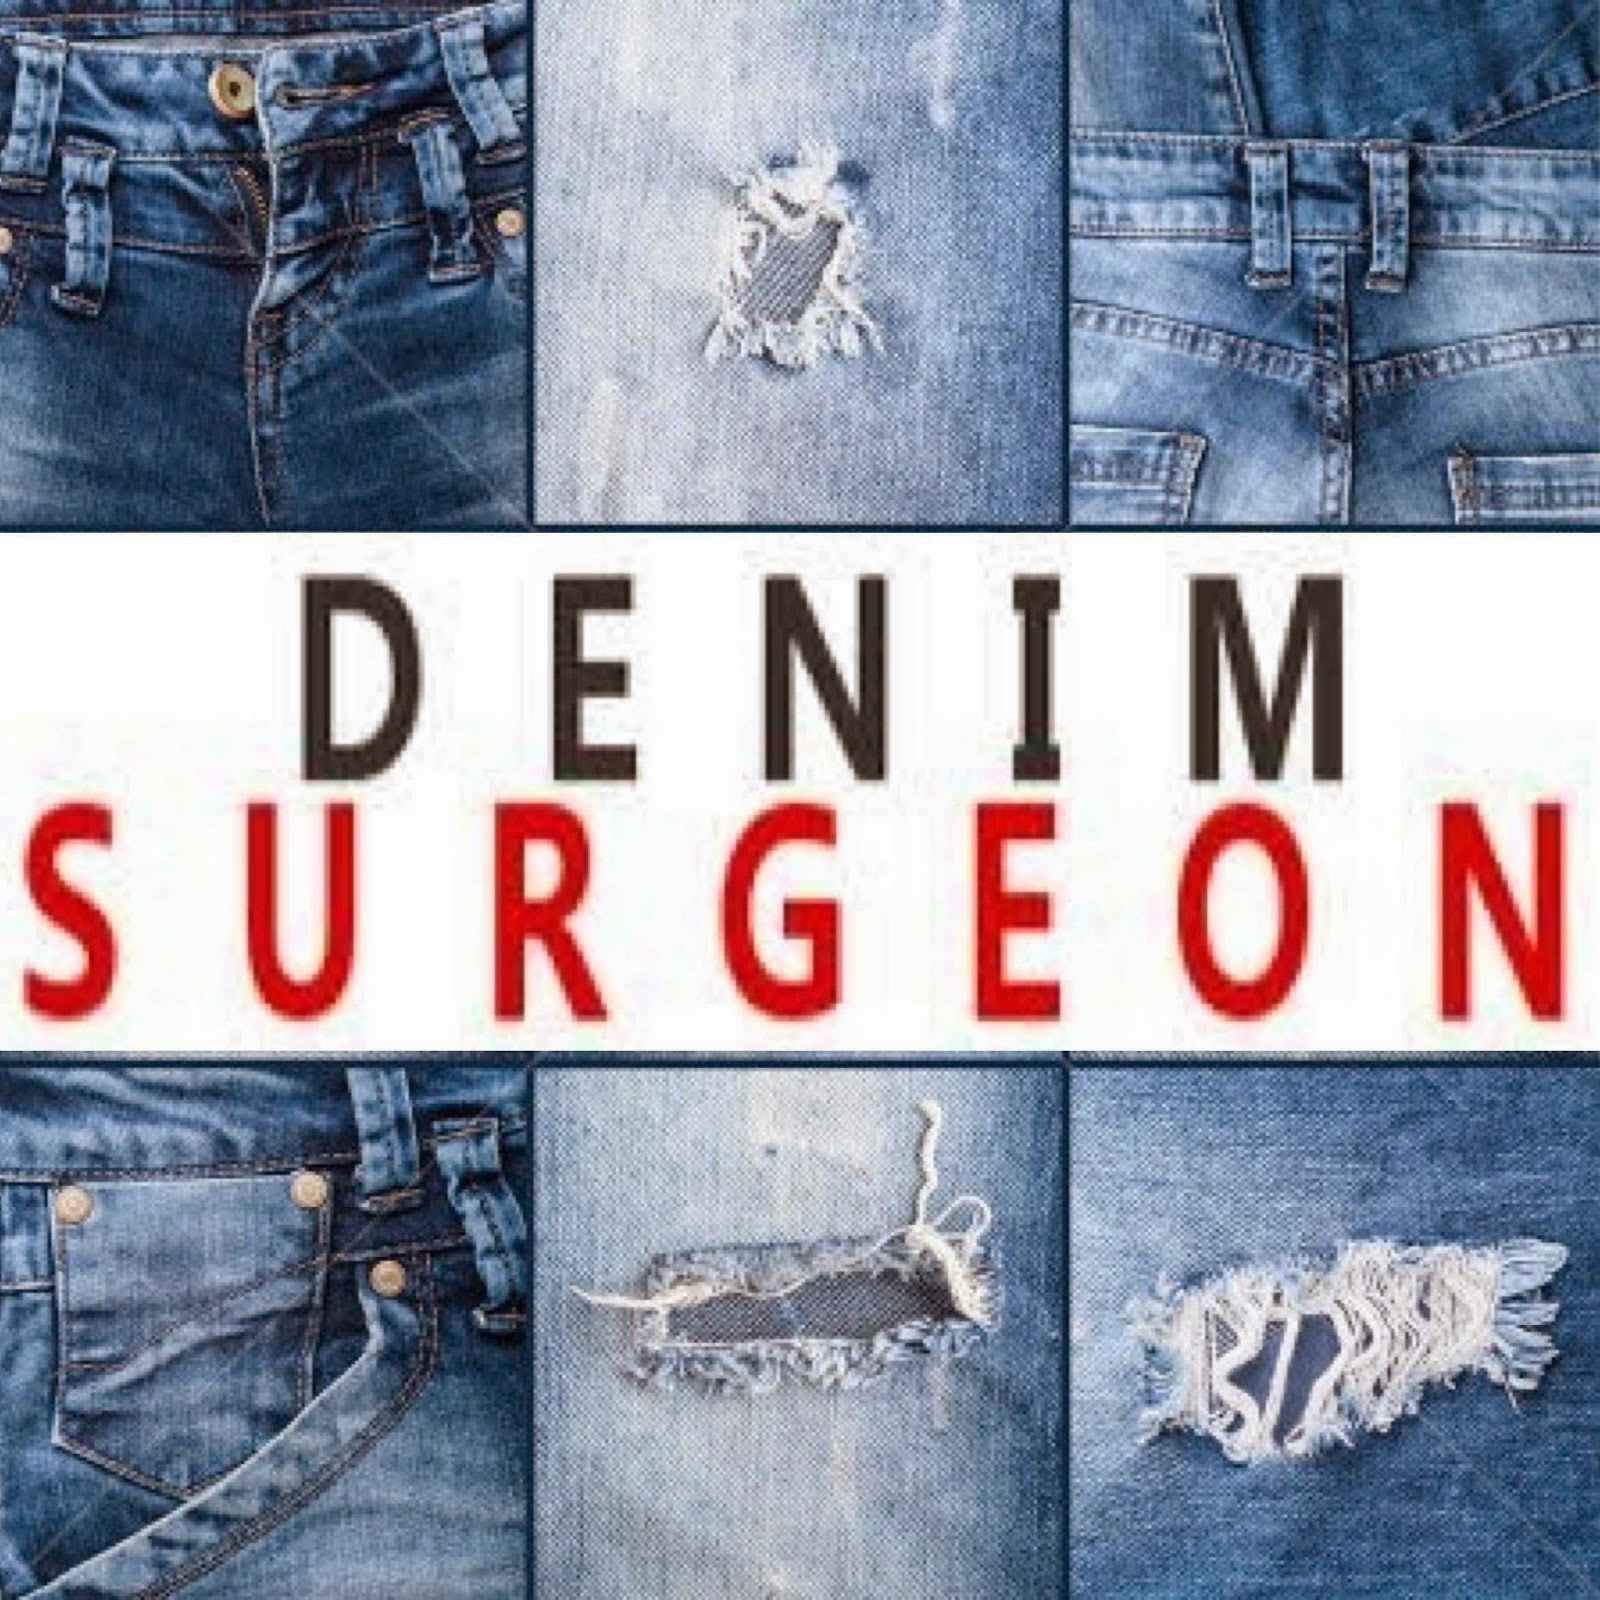 Photo of Jean Repair - Denim Repair - Denim Doctor - Jeans Tailor in New York City, New York, United States - 2 Picture of Point of interest, Establishment